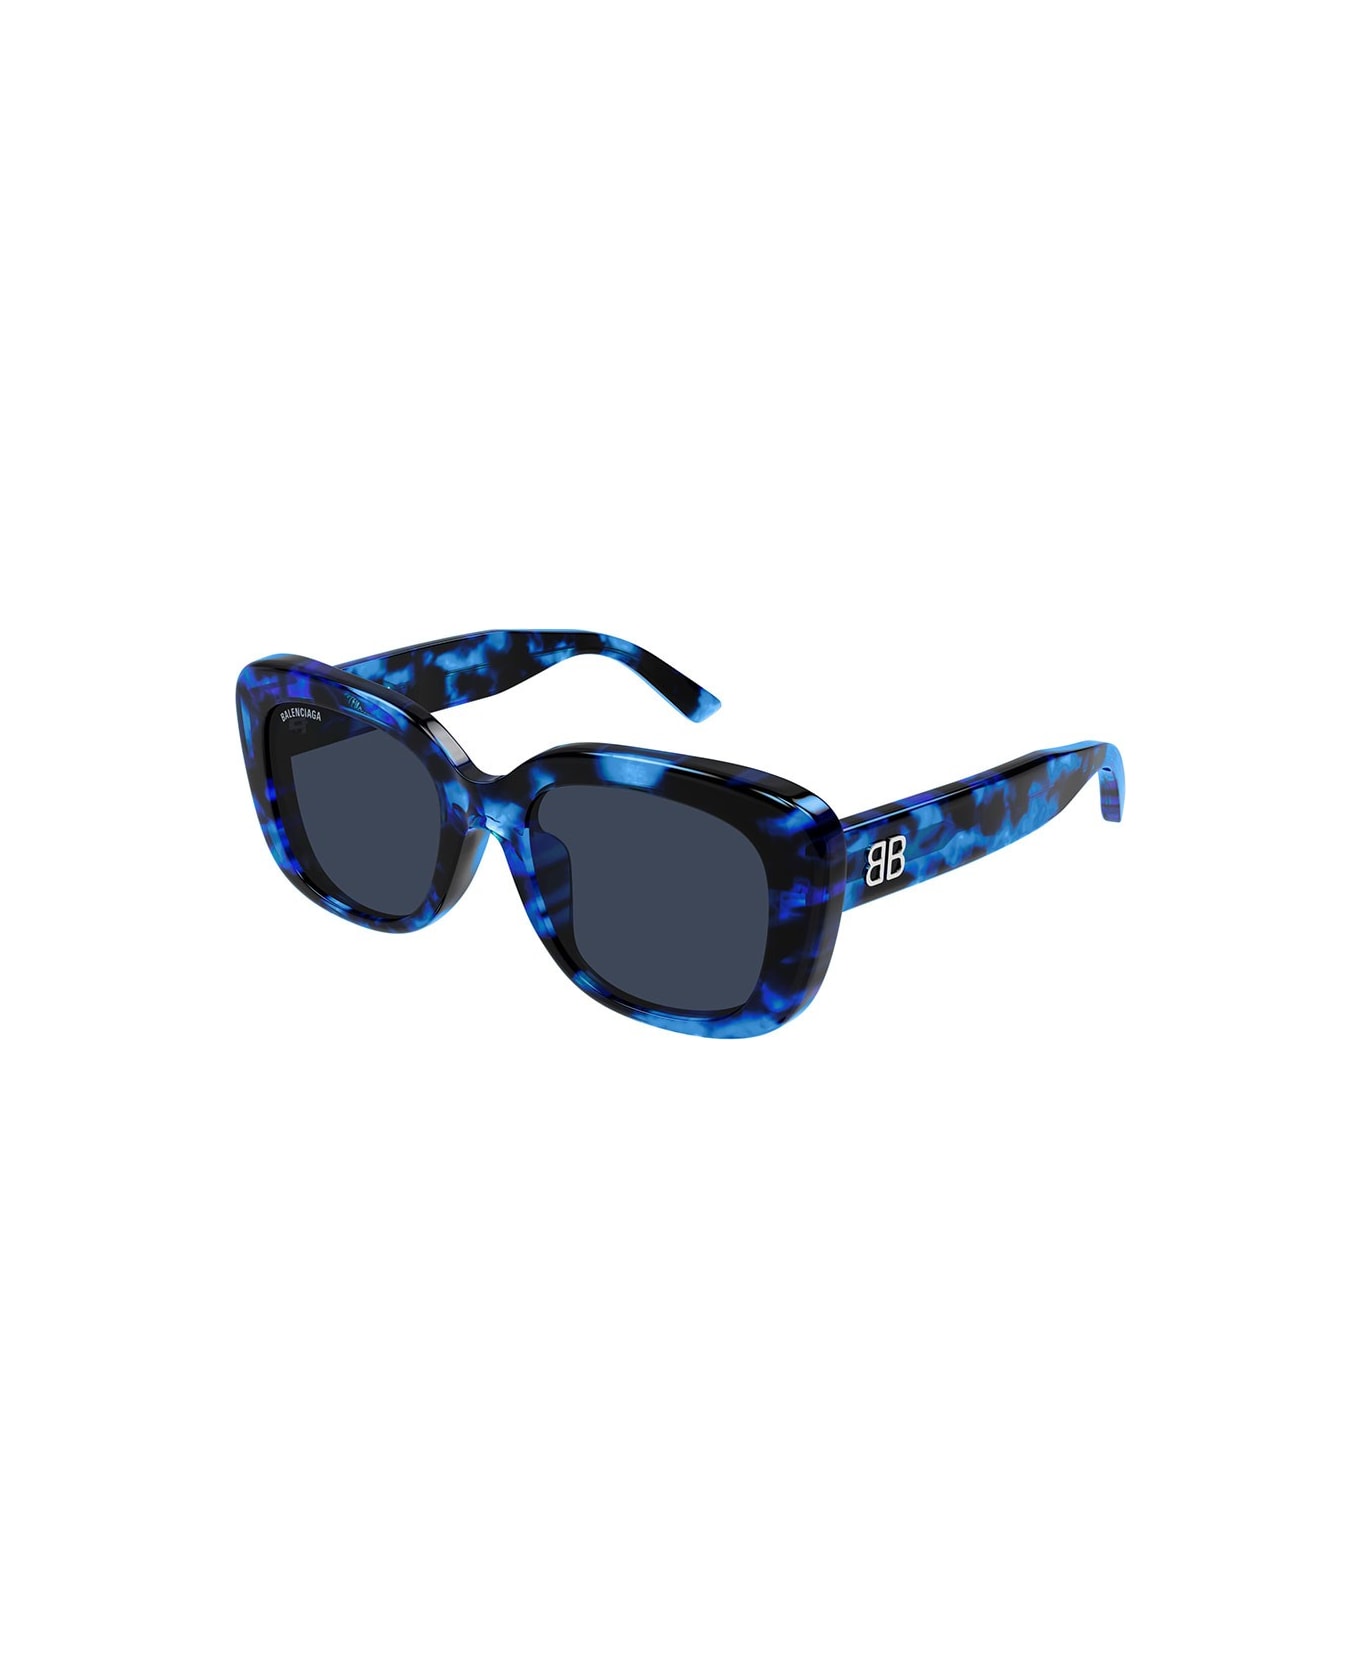 Balenciaga Eyewear Eyewear - Blu e nero/Blu